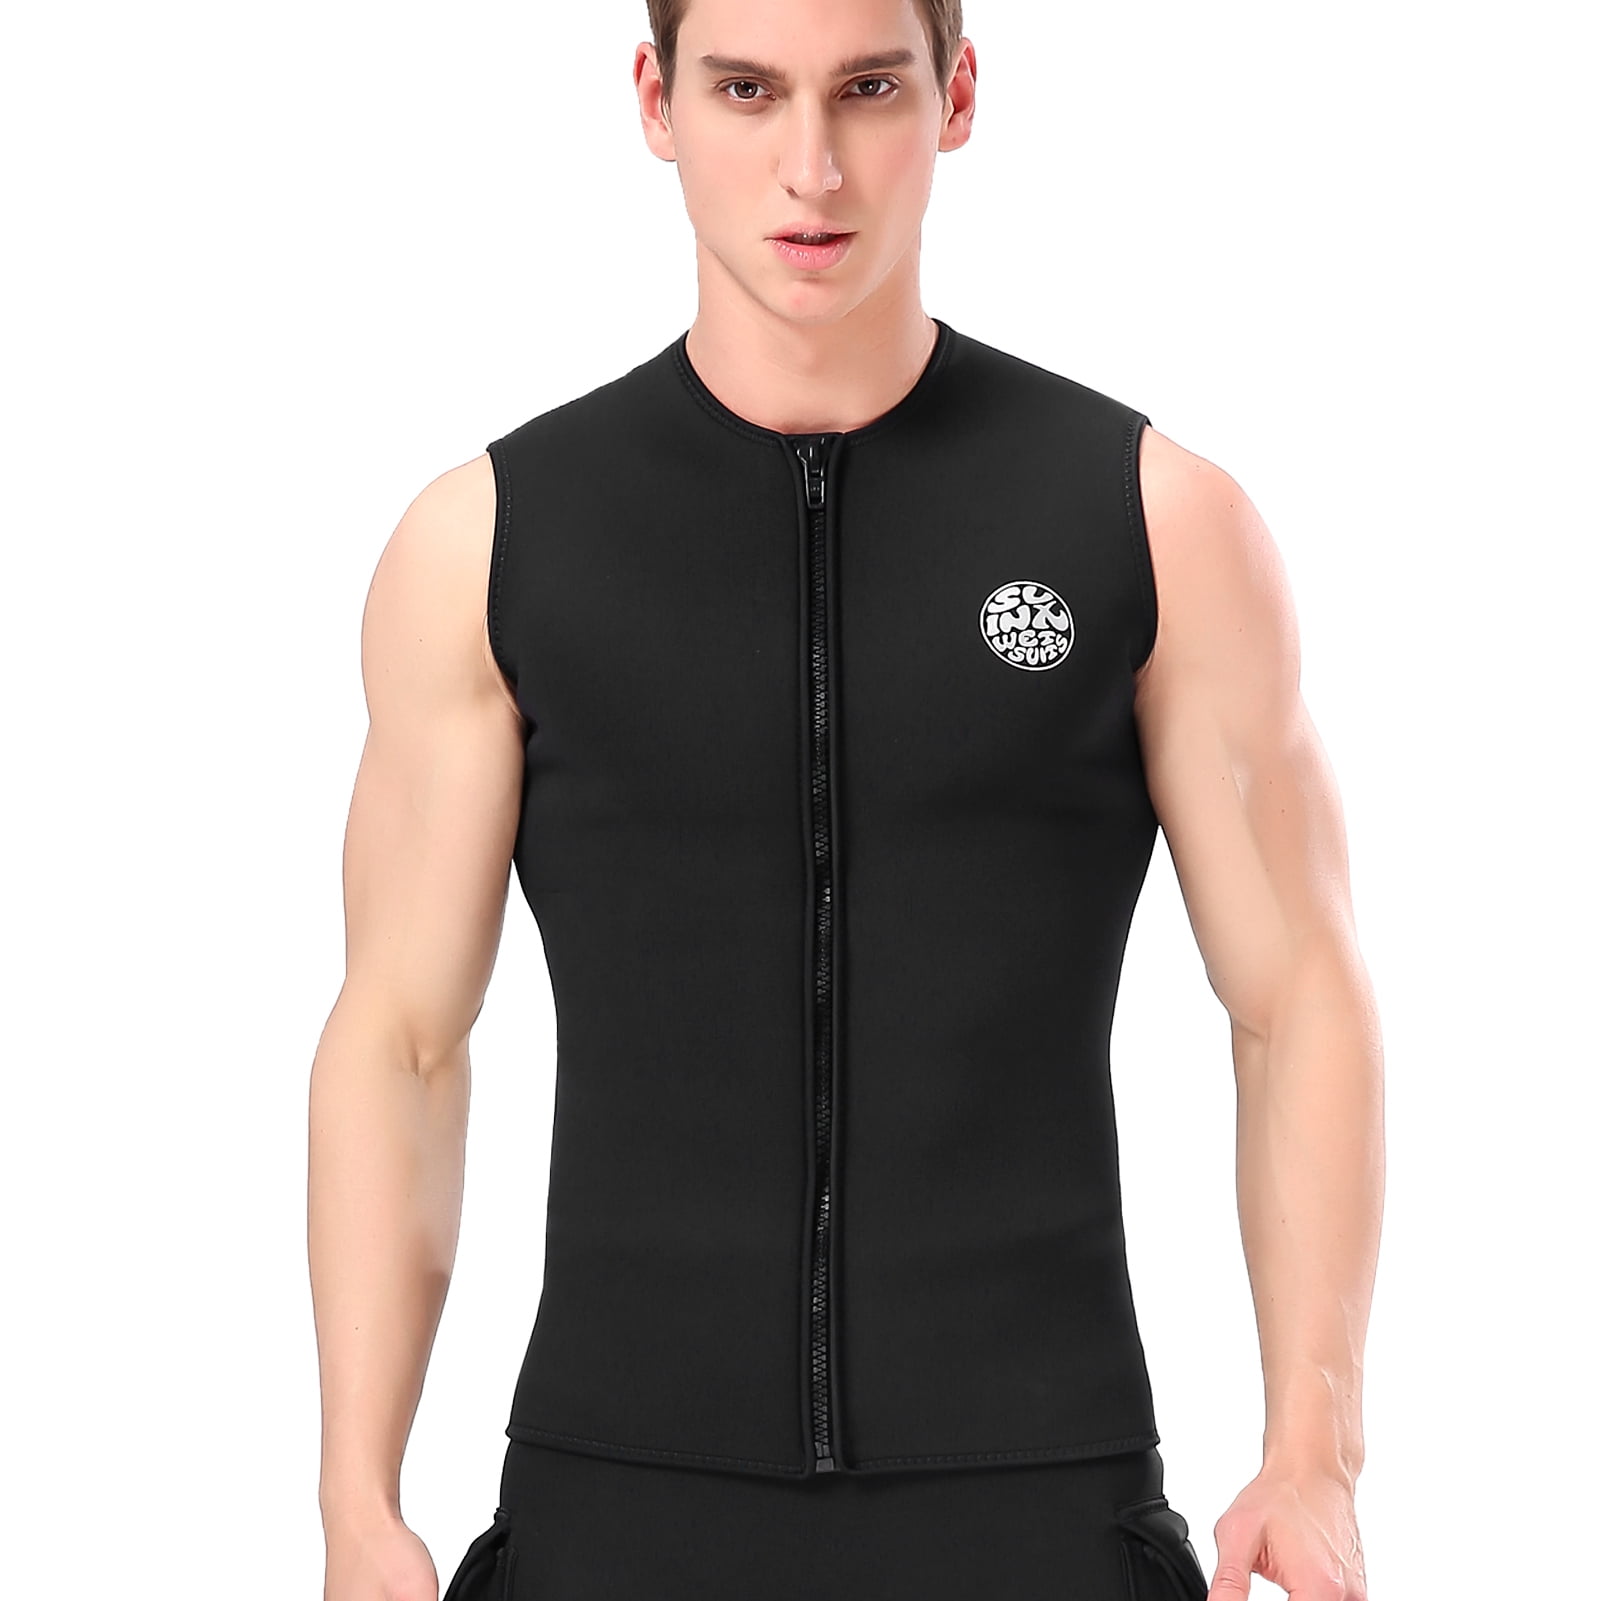 Premium Neoprene Wetsuit Vest for Swimming and Sailing, Thermal Sleeveless  Vest